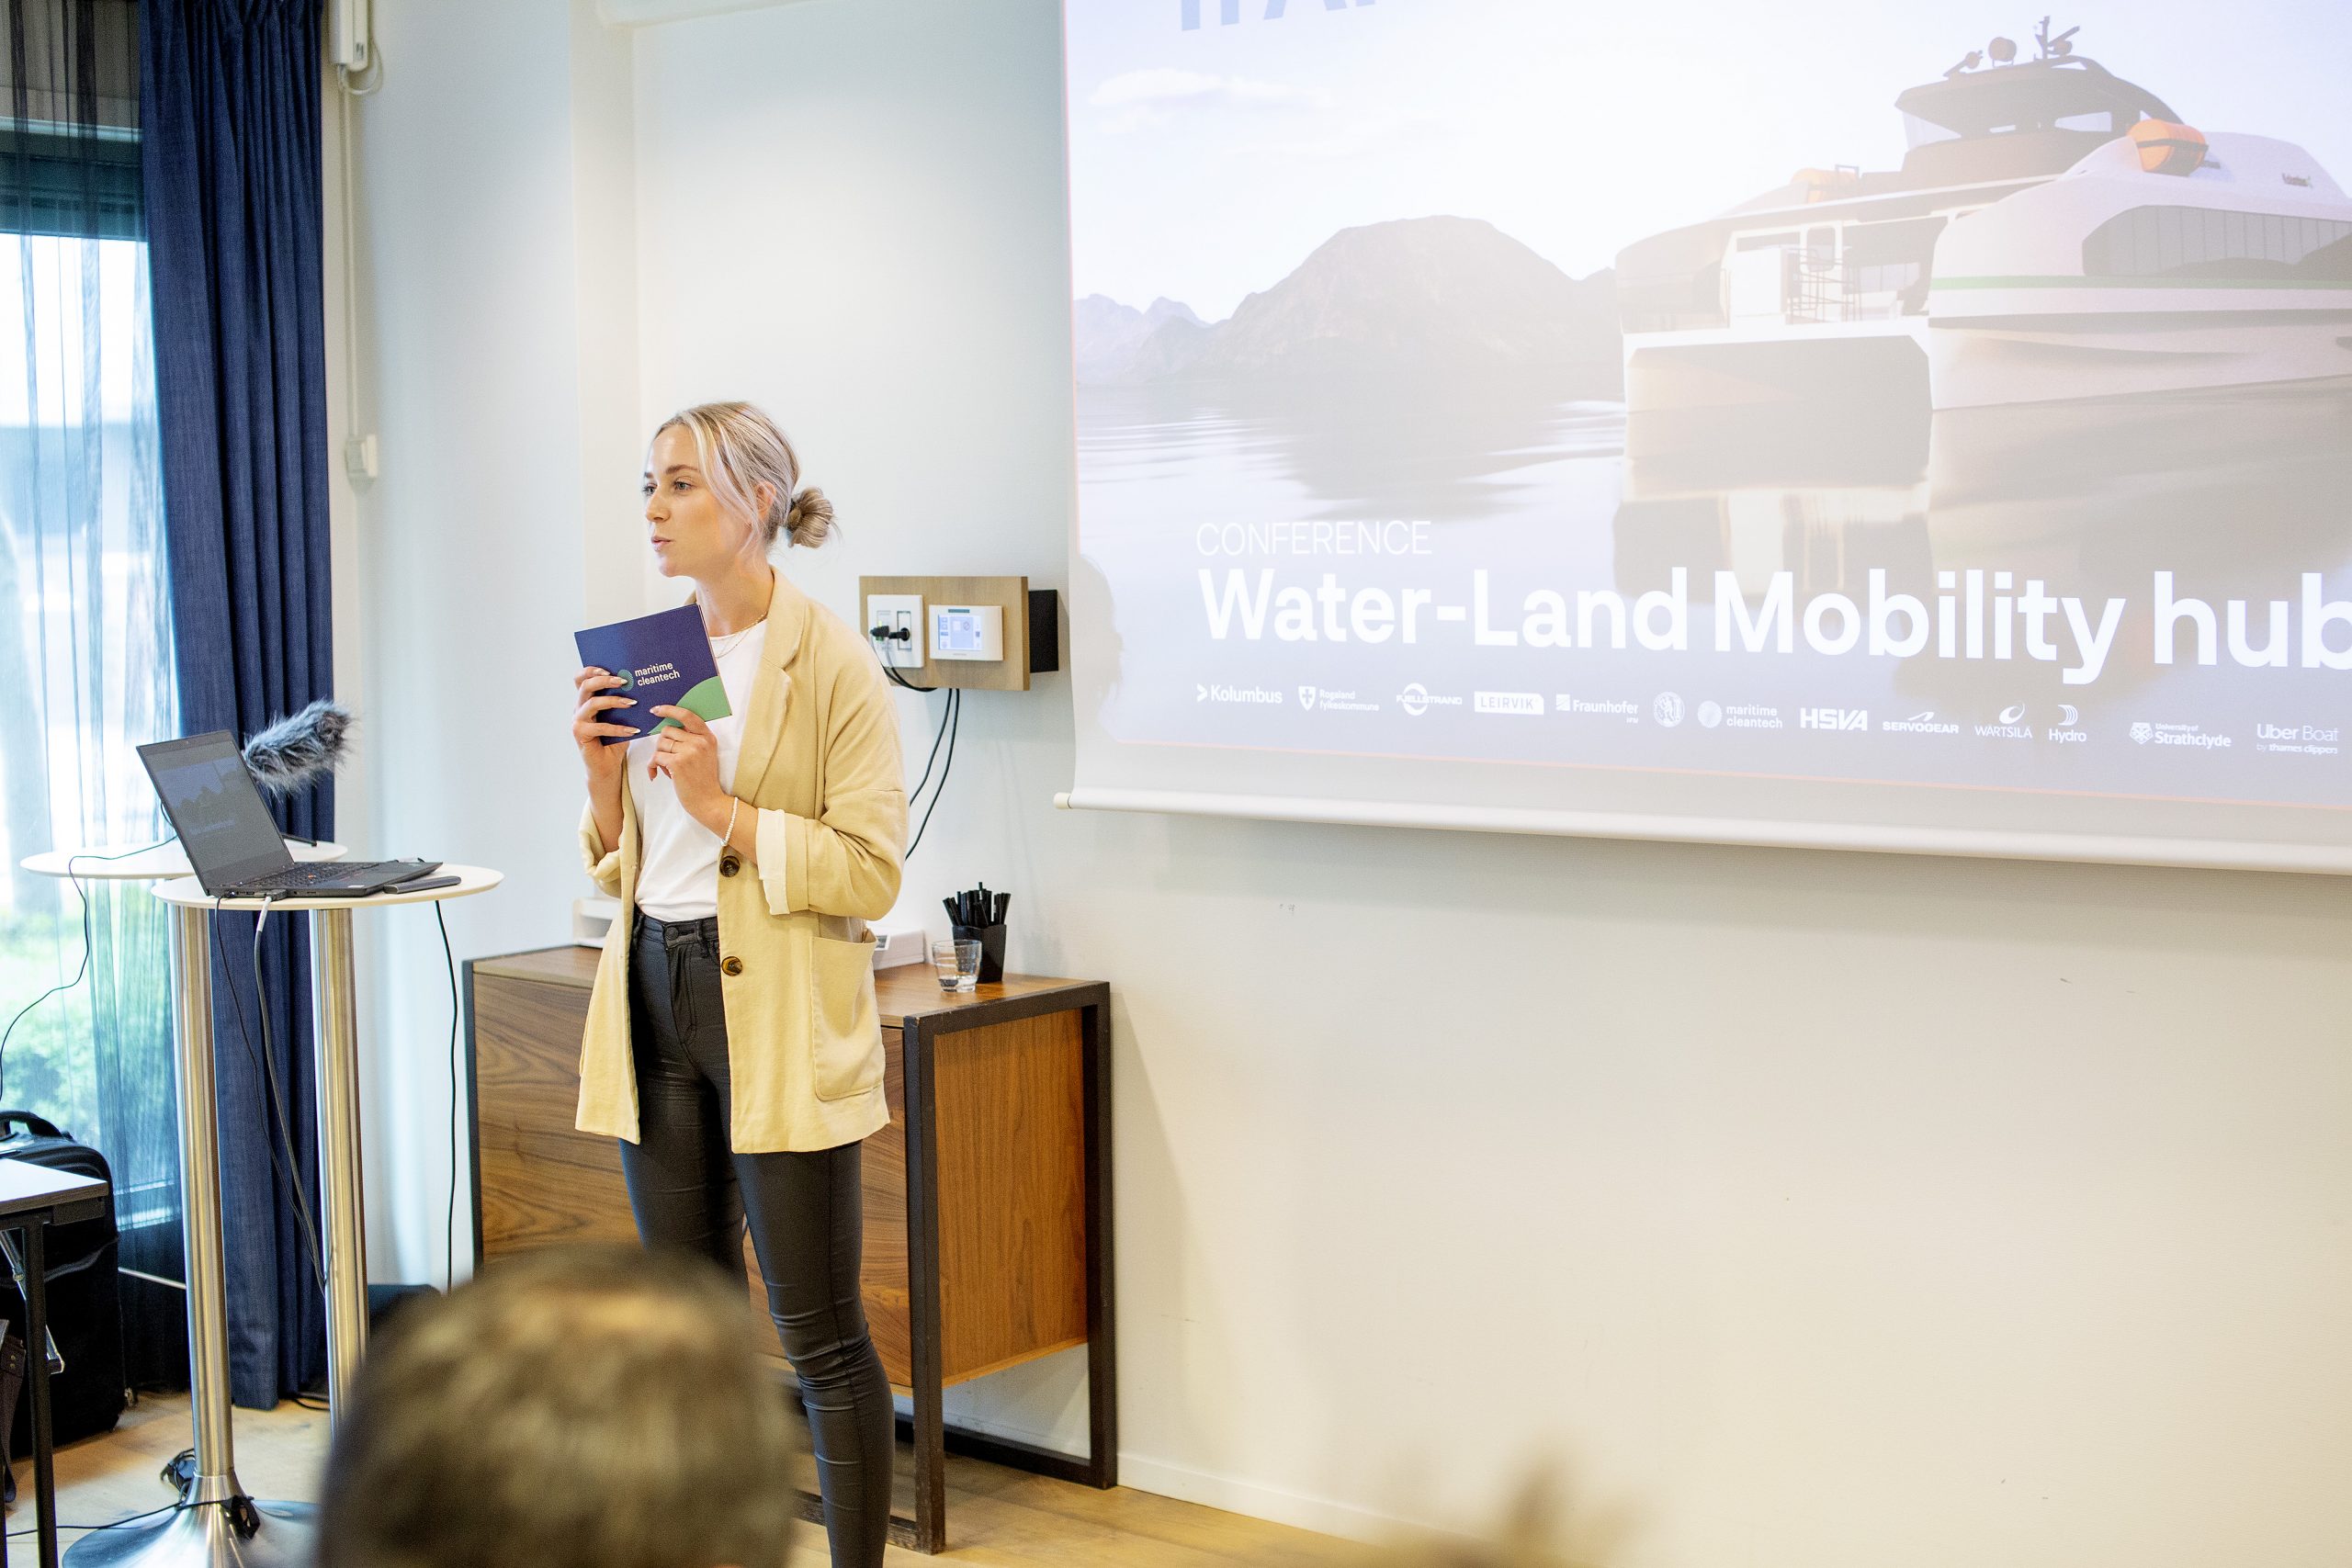 Integrating waterborne transport to urban mobility hubs 